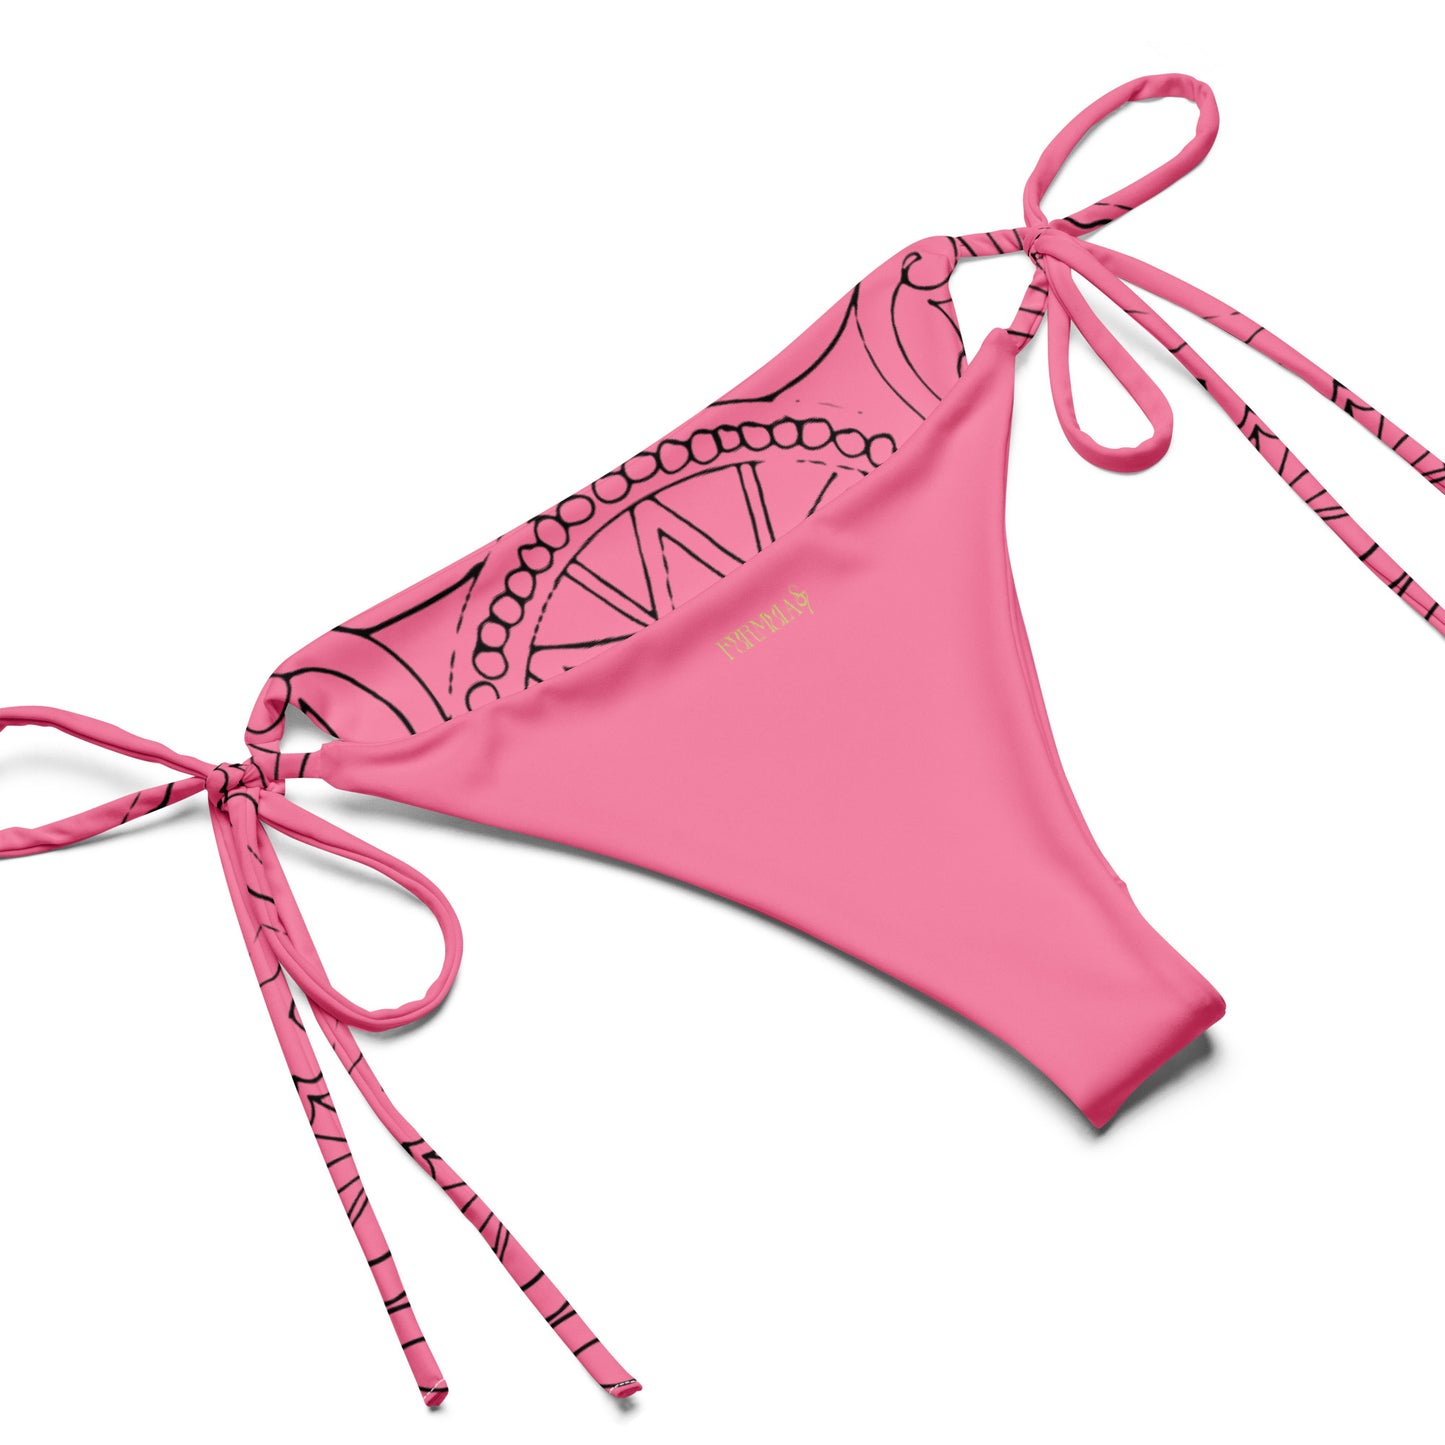 Medusa's Sea Medallion recycled pink string bikini